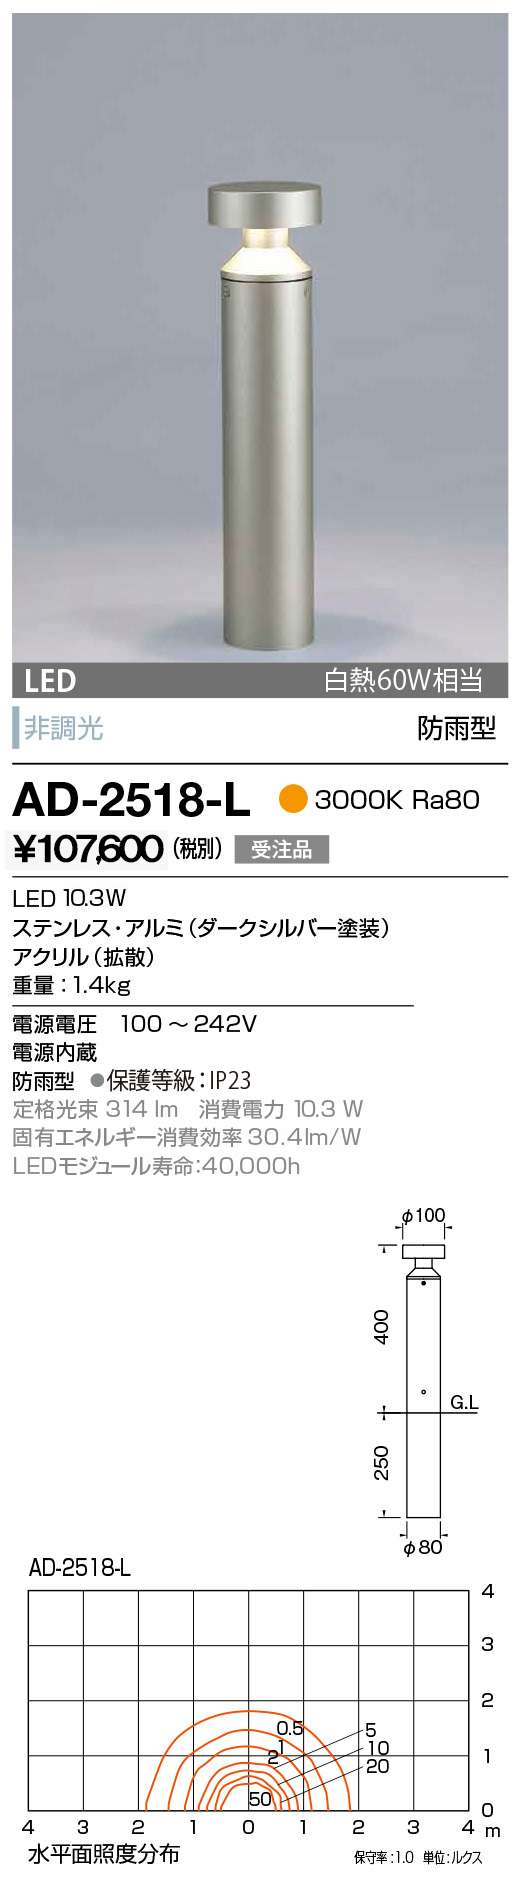 AD-2657-L 山田照明 ガーデンライト 黒色 LED（電球色） - 3